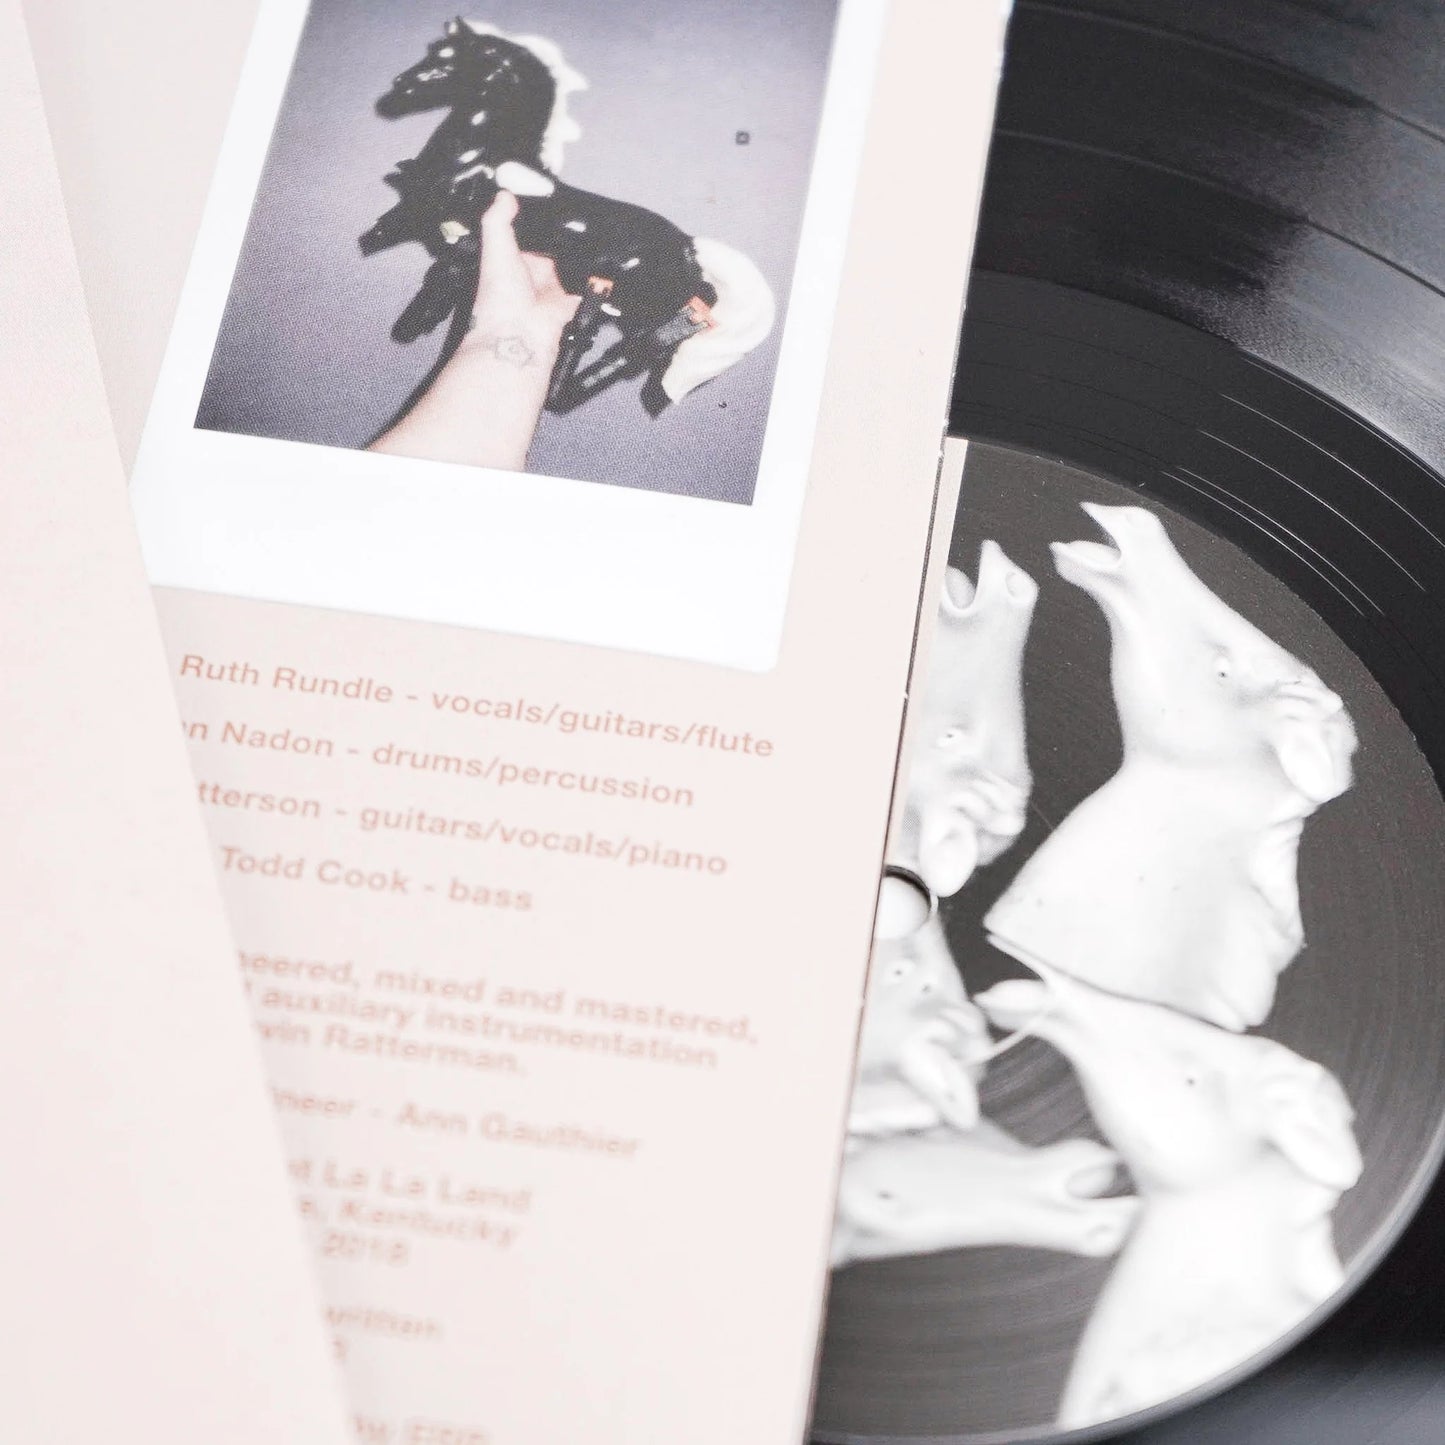 Emma Ruth Rundle - On Dark Horses (Black Vinyl)